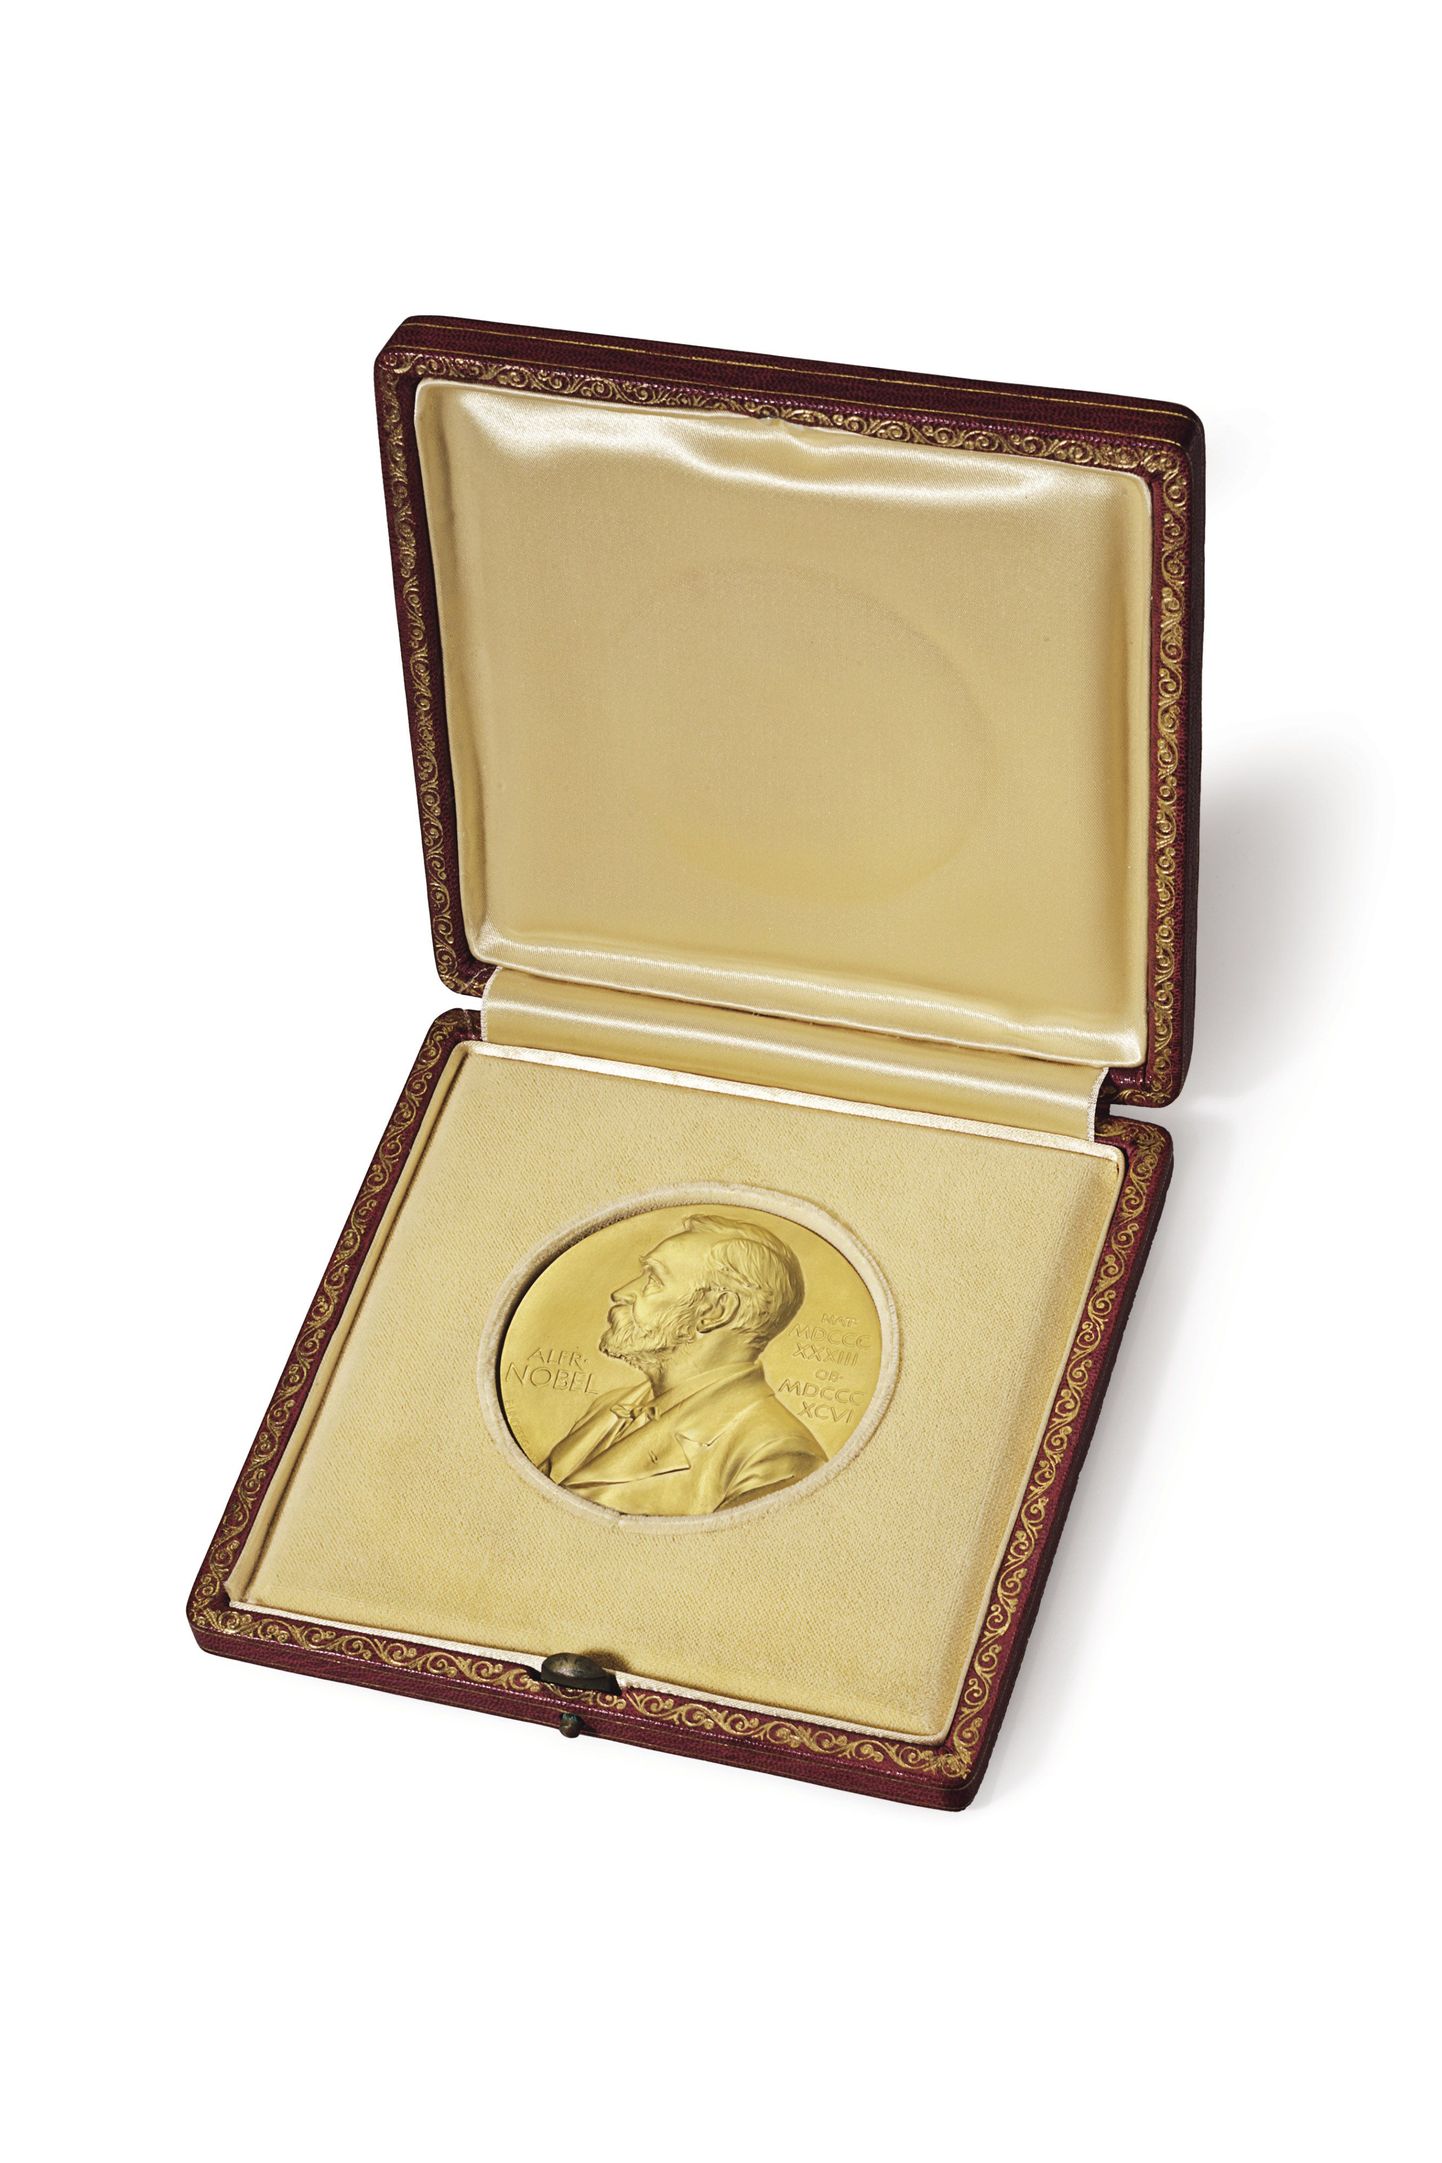 James Watsoni Nobeli medal